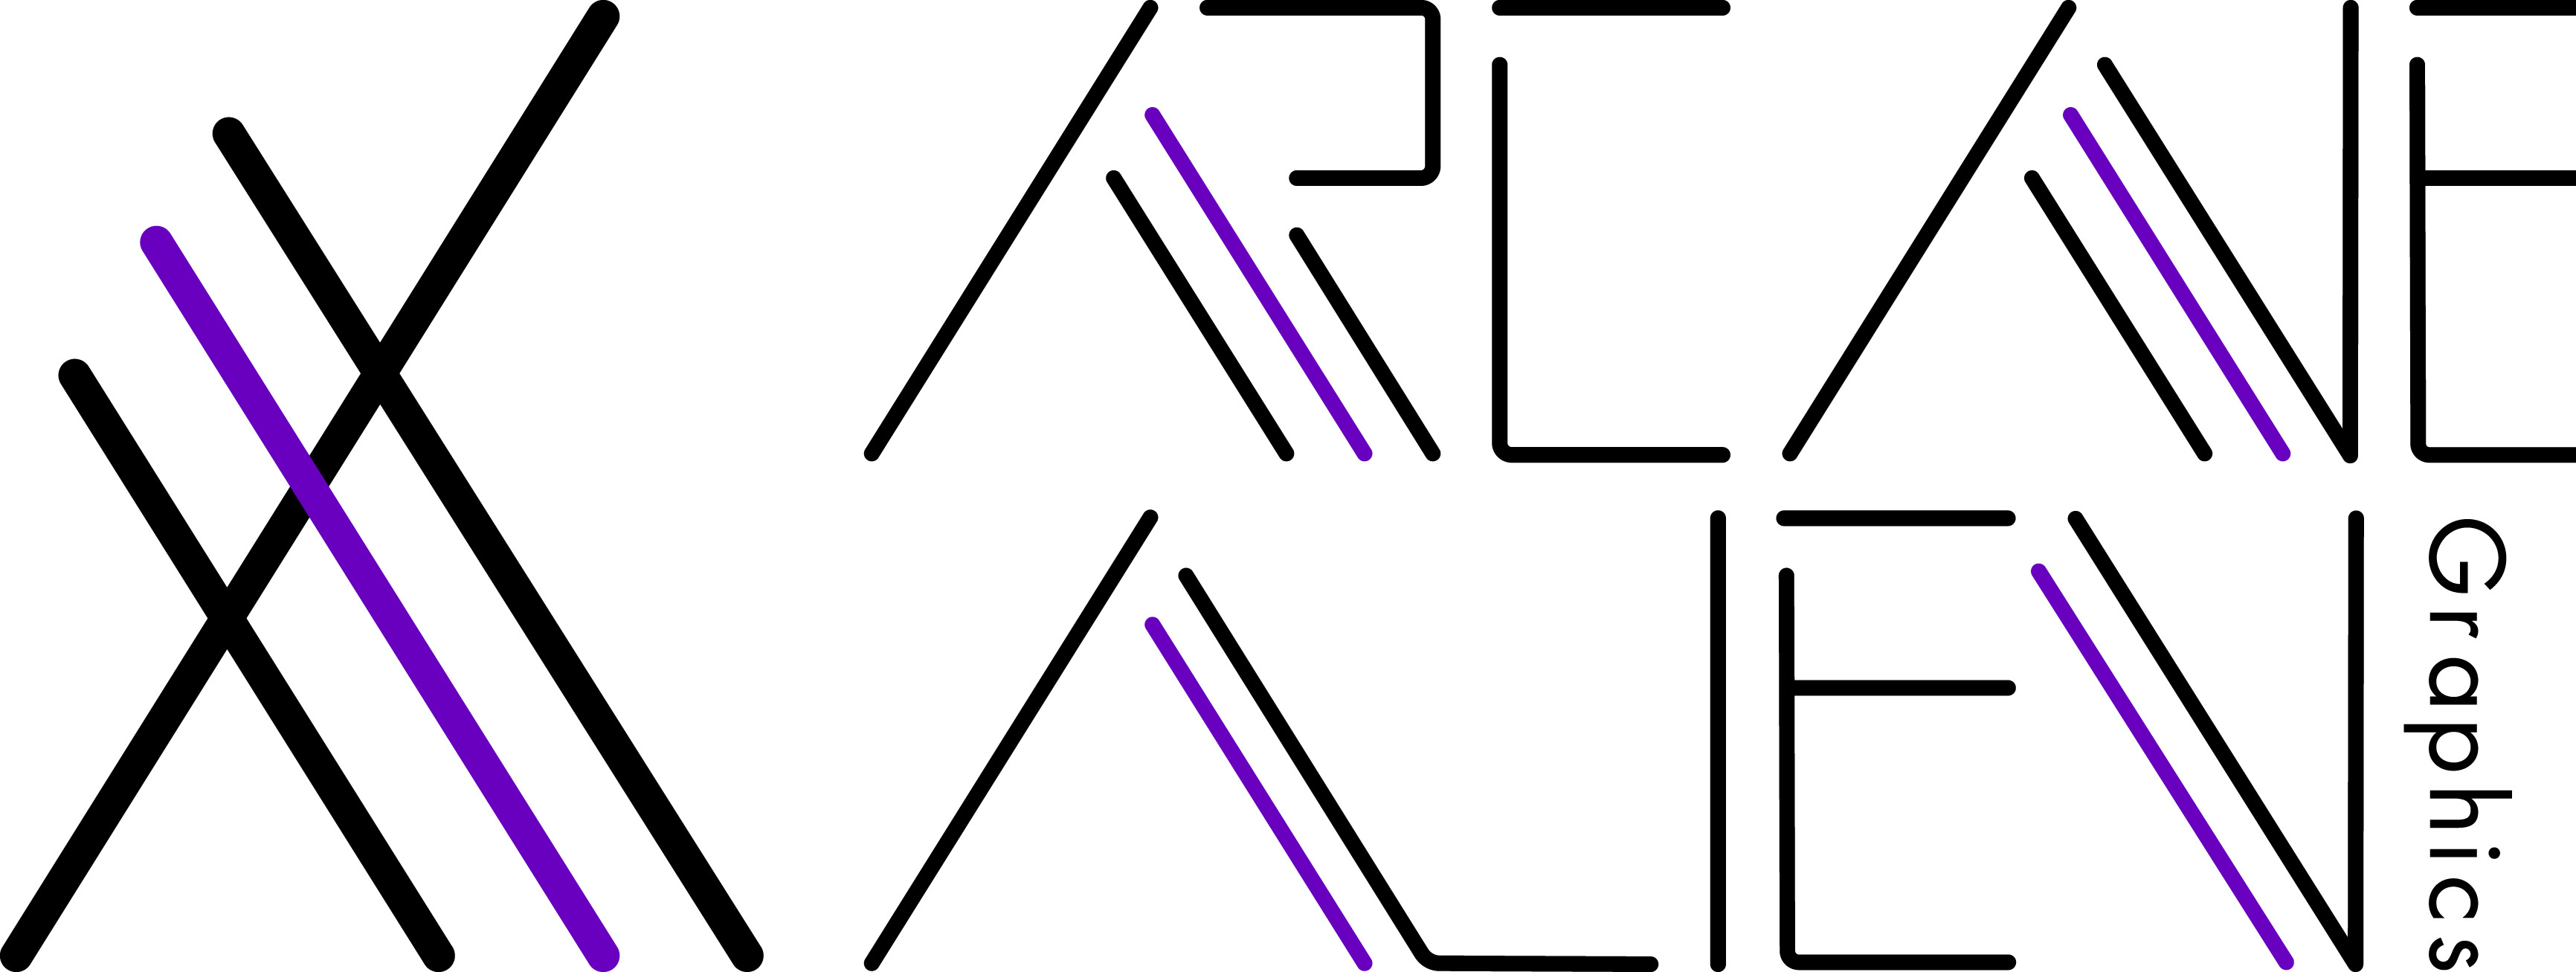 arcane alien graphics logo